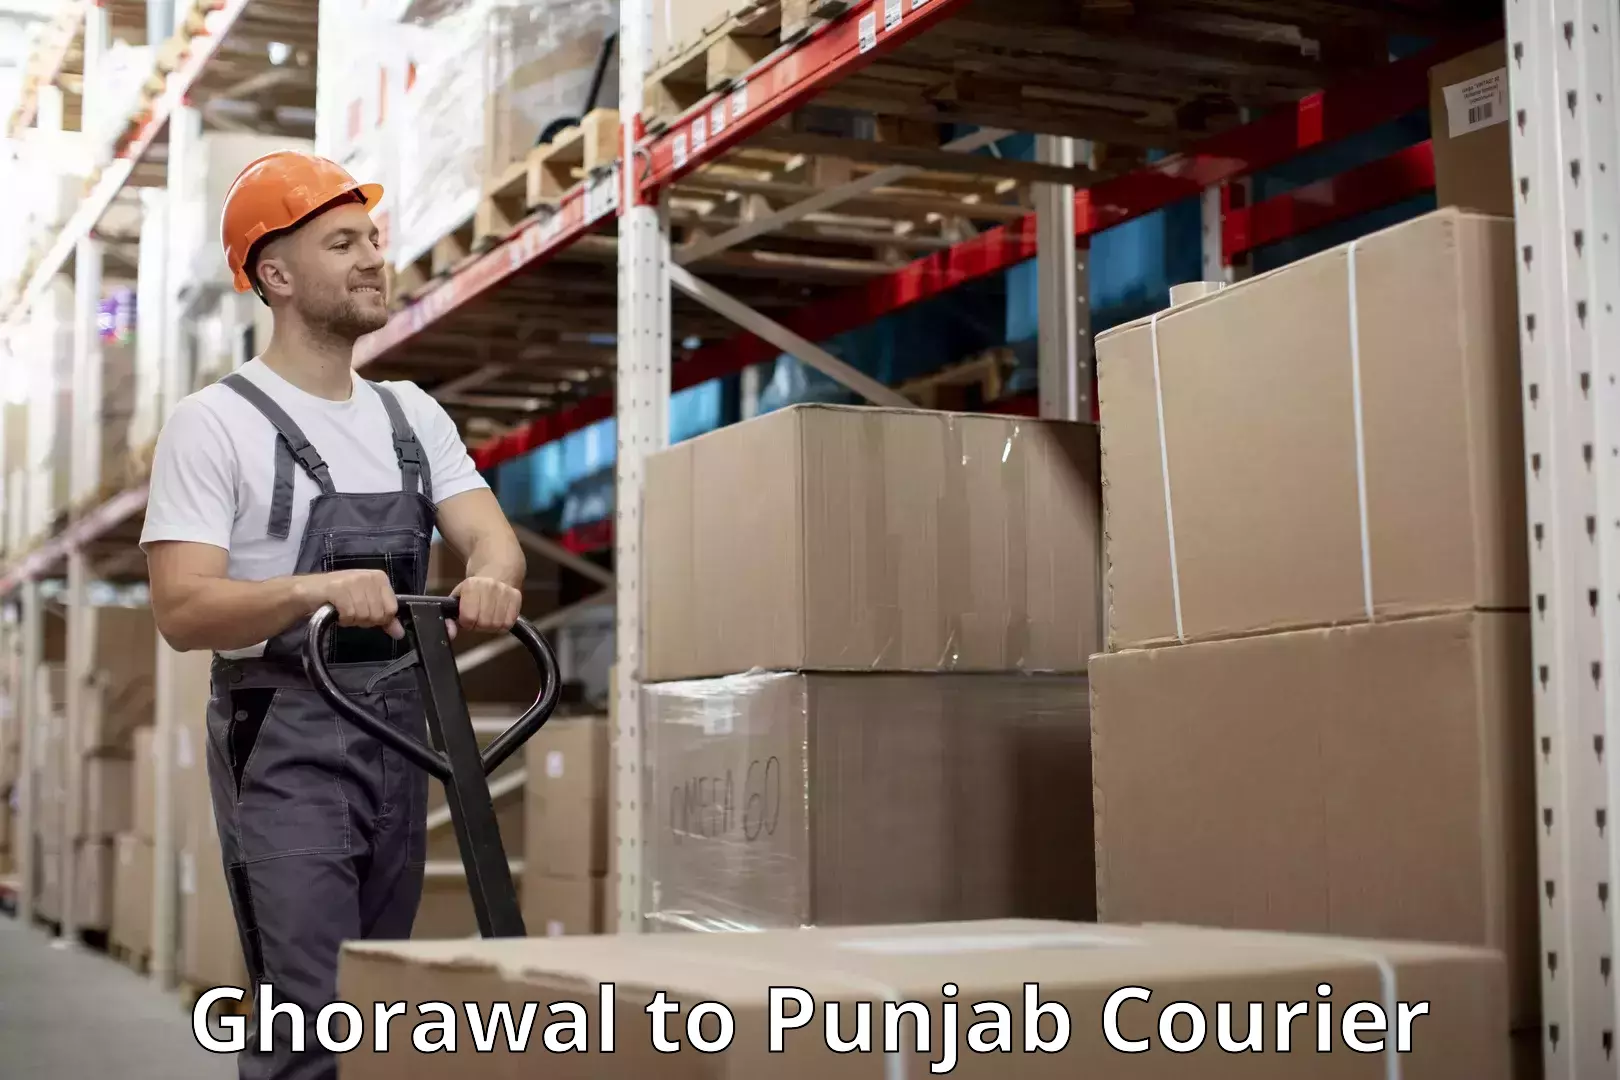 Baggage relocation service Ghorawal to Punjab